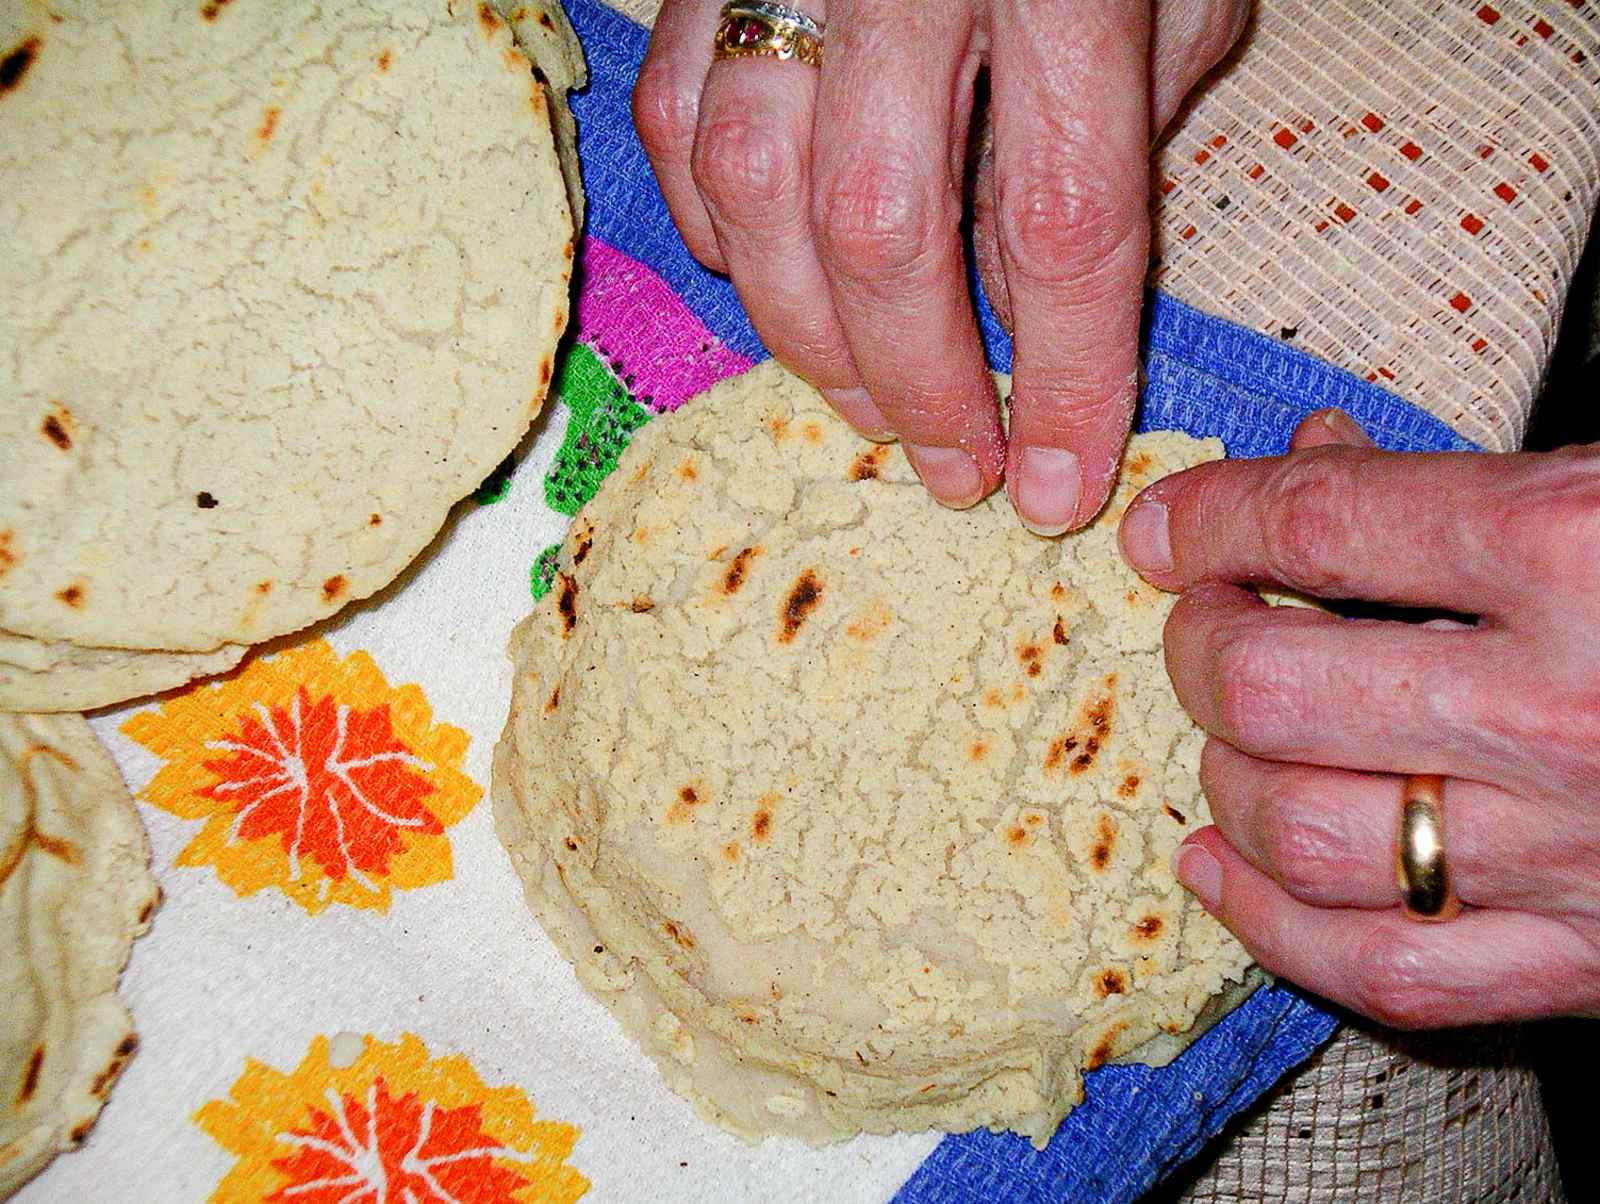 Making tortillas by hand , Jocotepec. Credit: Gwen Burton.